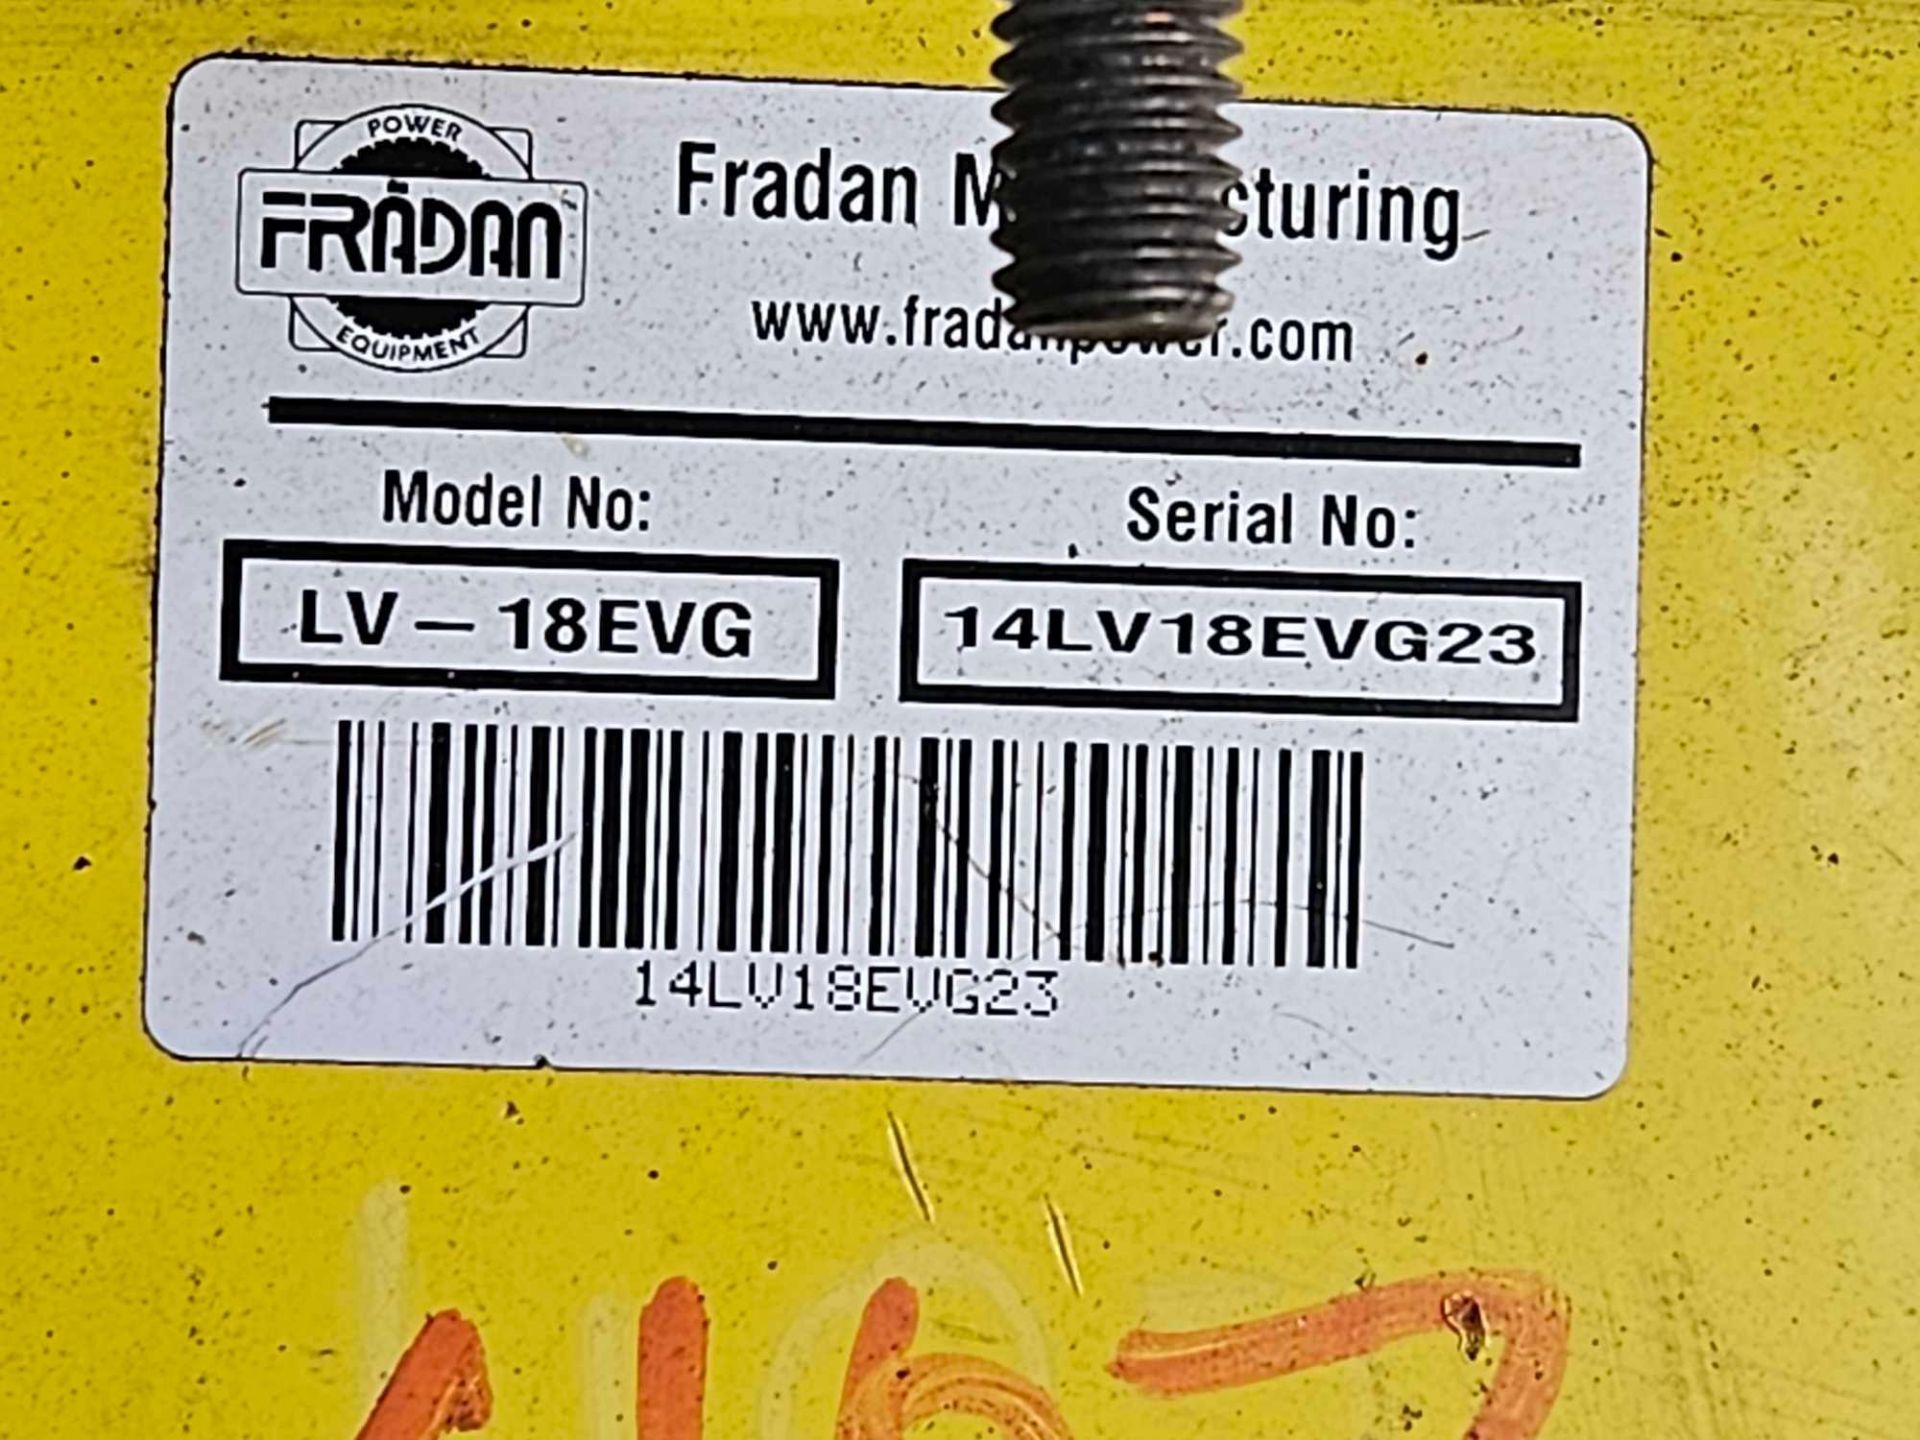 Fradan Vacuum - Image 4 of 4